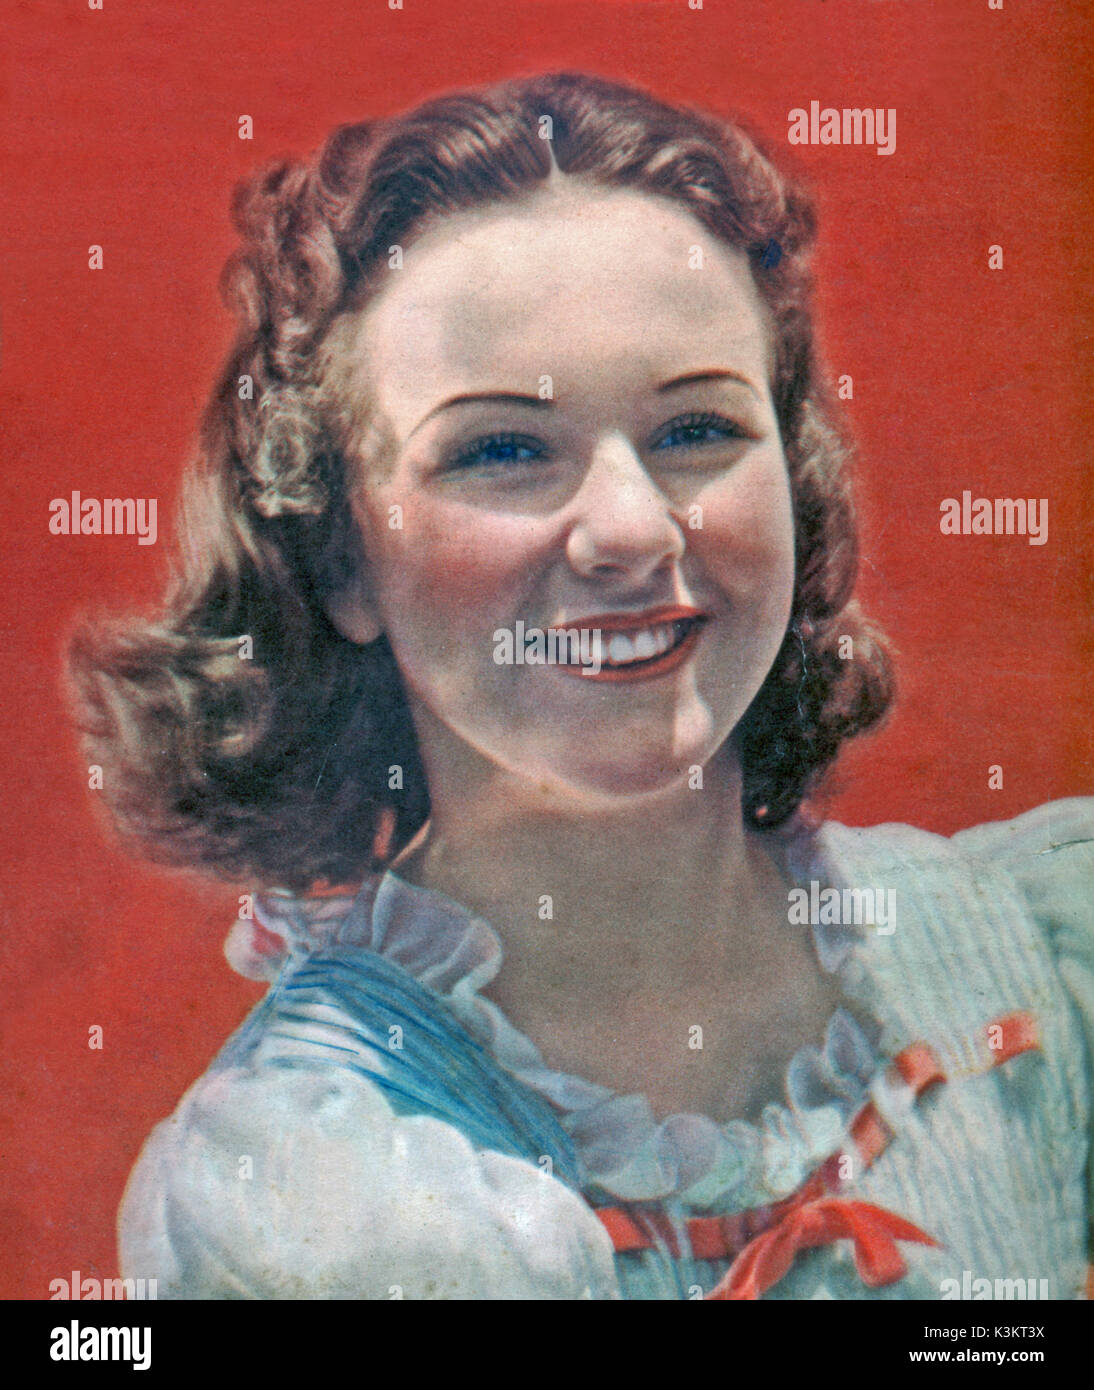 DEANNA DURBIN American actress (1921 - 2013)       Date: 1921 - 2013 Stock Photo